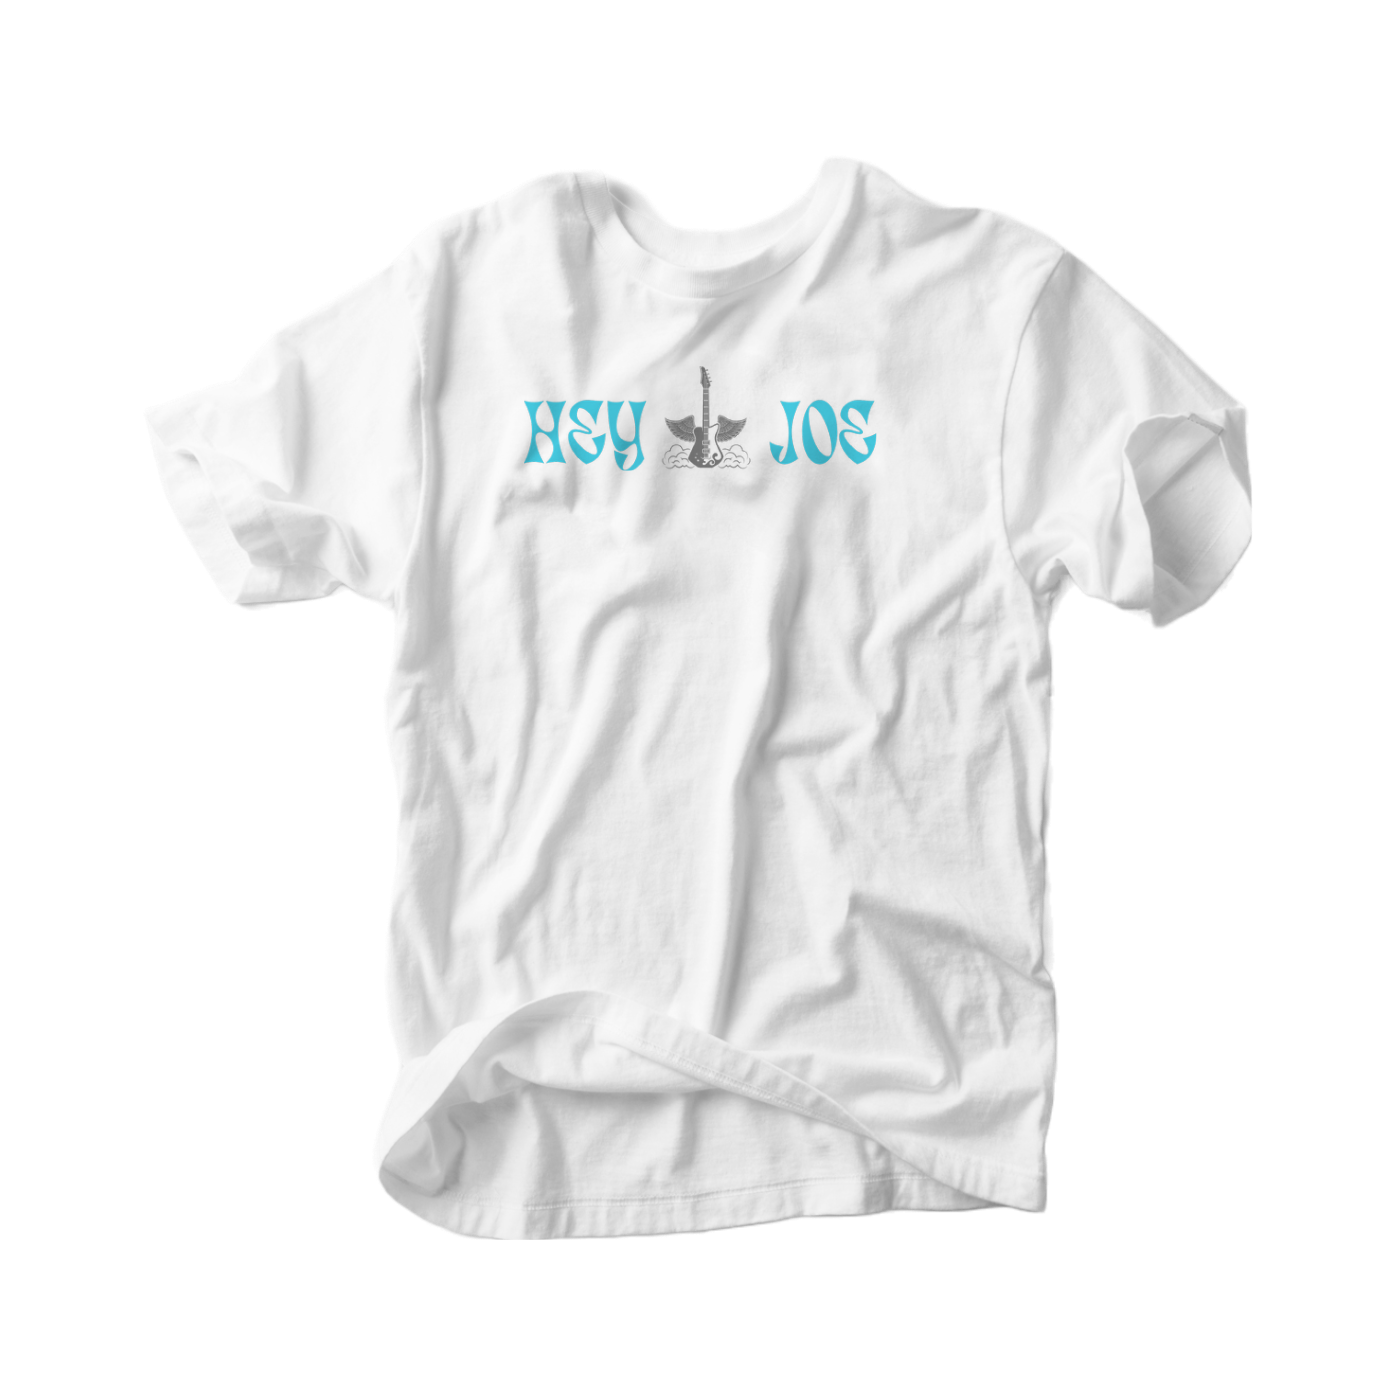 "Hey Joe" Unisex T-shirt